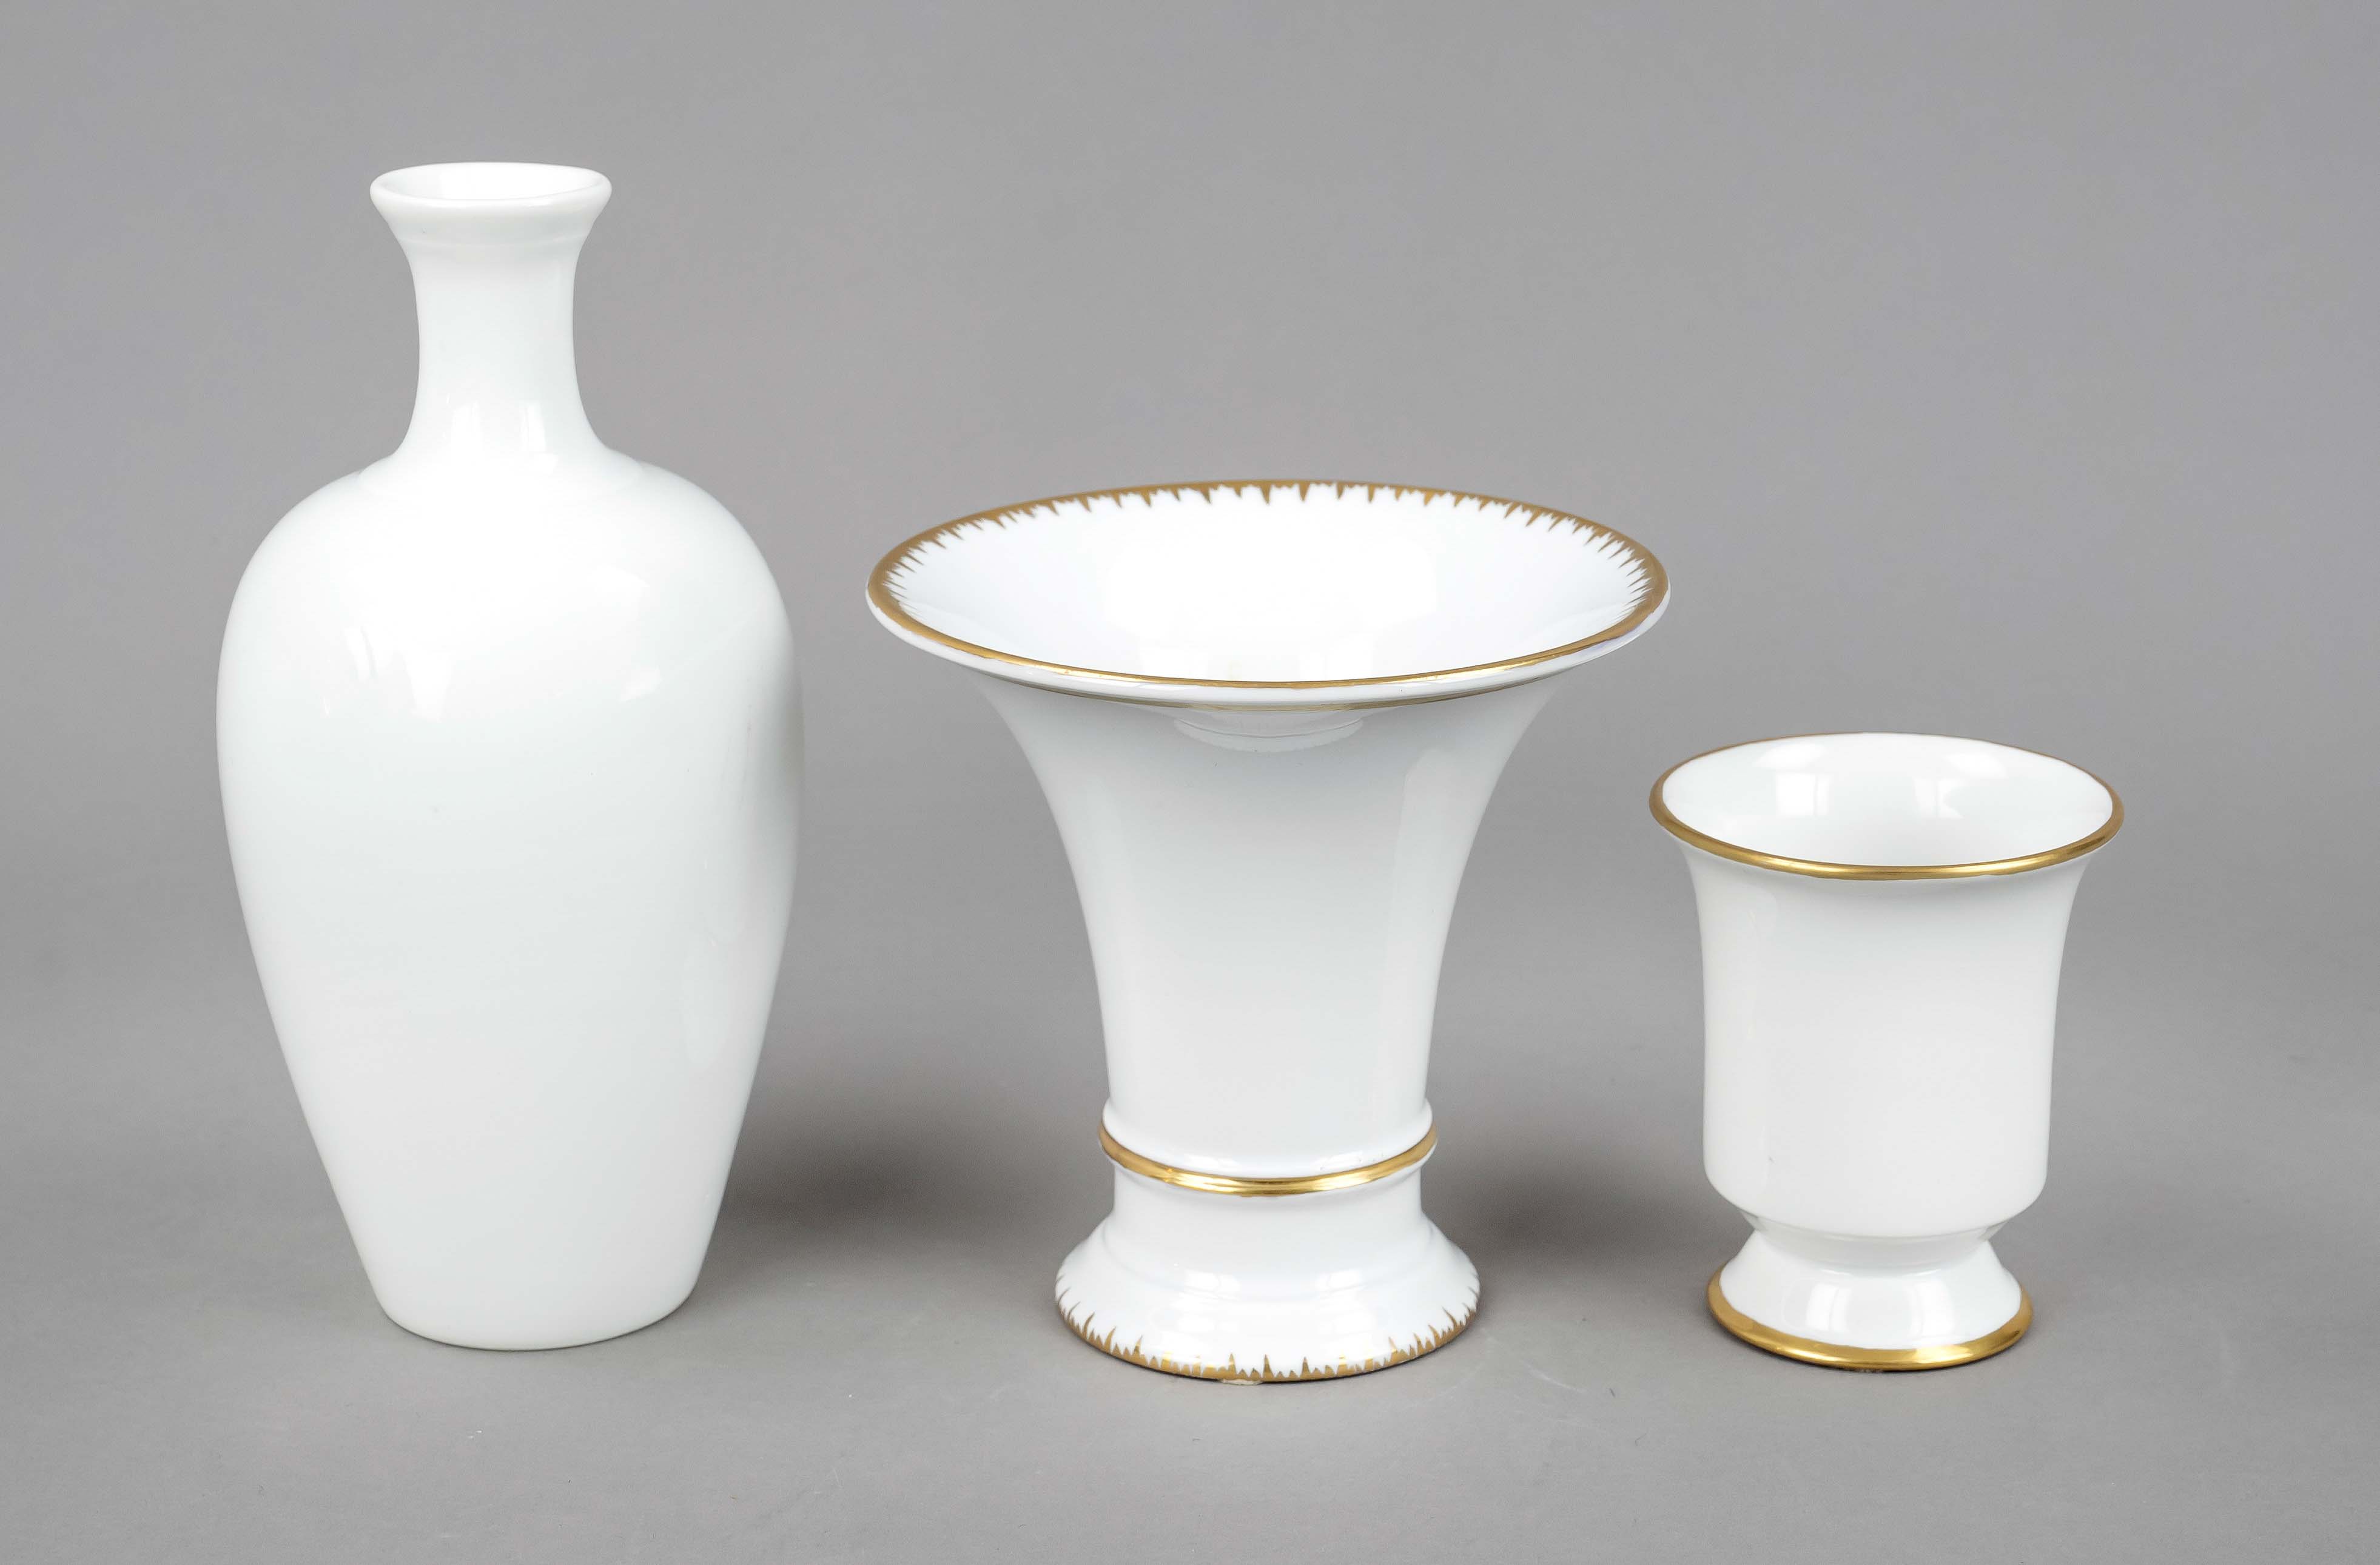 Three vases, KPM Berlin, 2nd half of 20th century, 2nd choice, white, Japanese vase, design